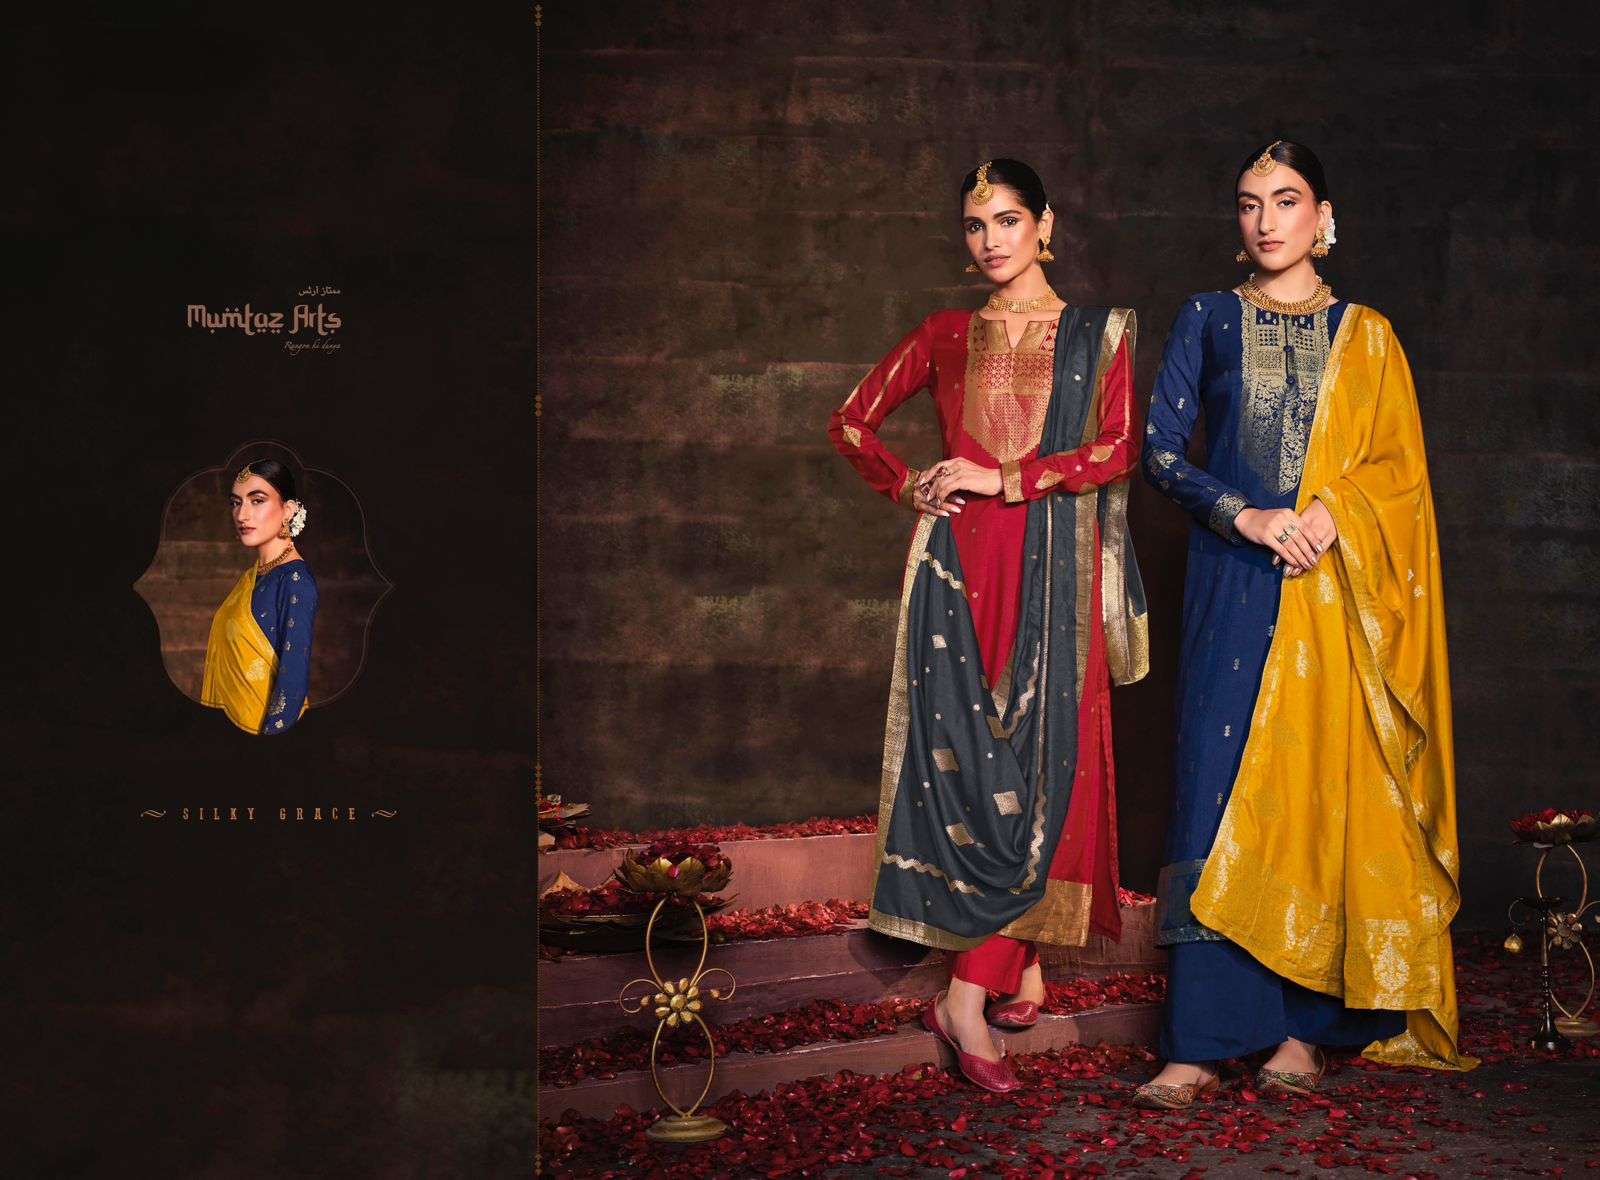 mumtaz arts guzarish 3001-3006 exclusive designer salwar kameez catalogue exporter surat 